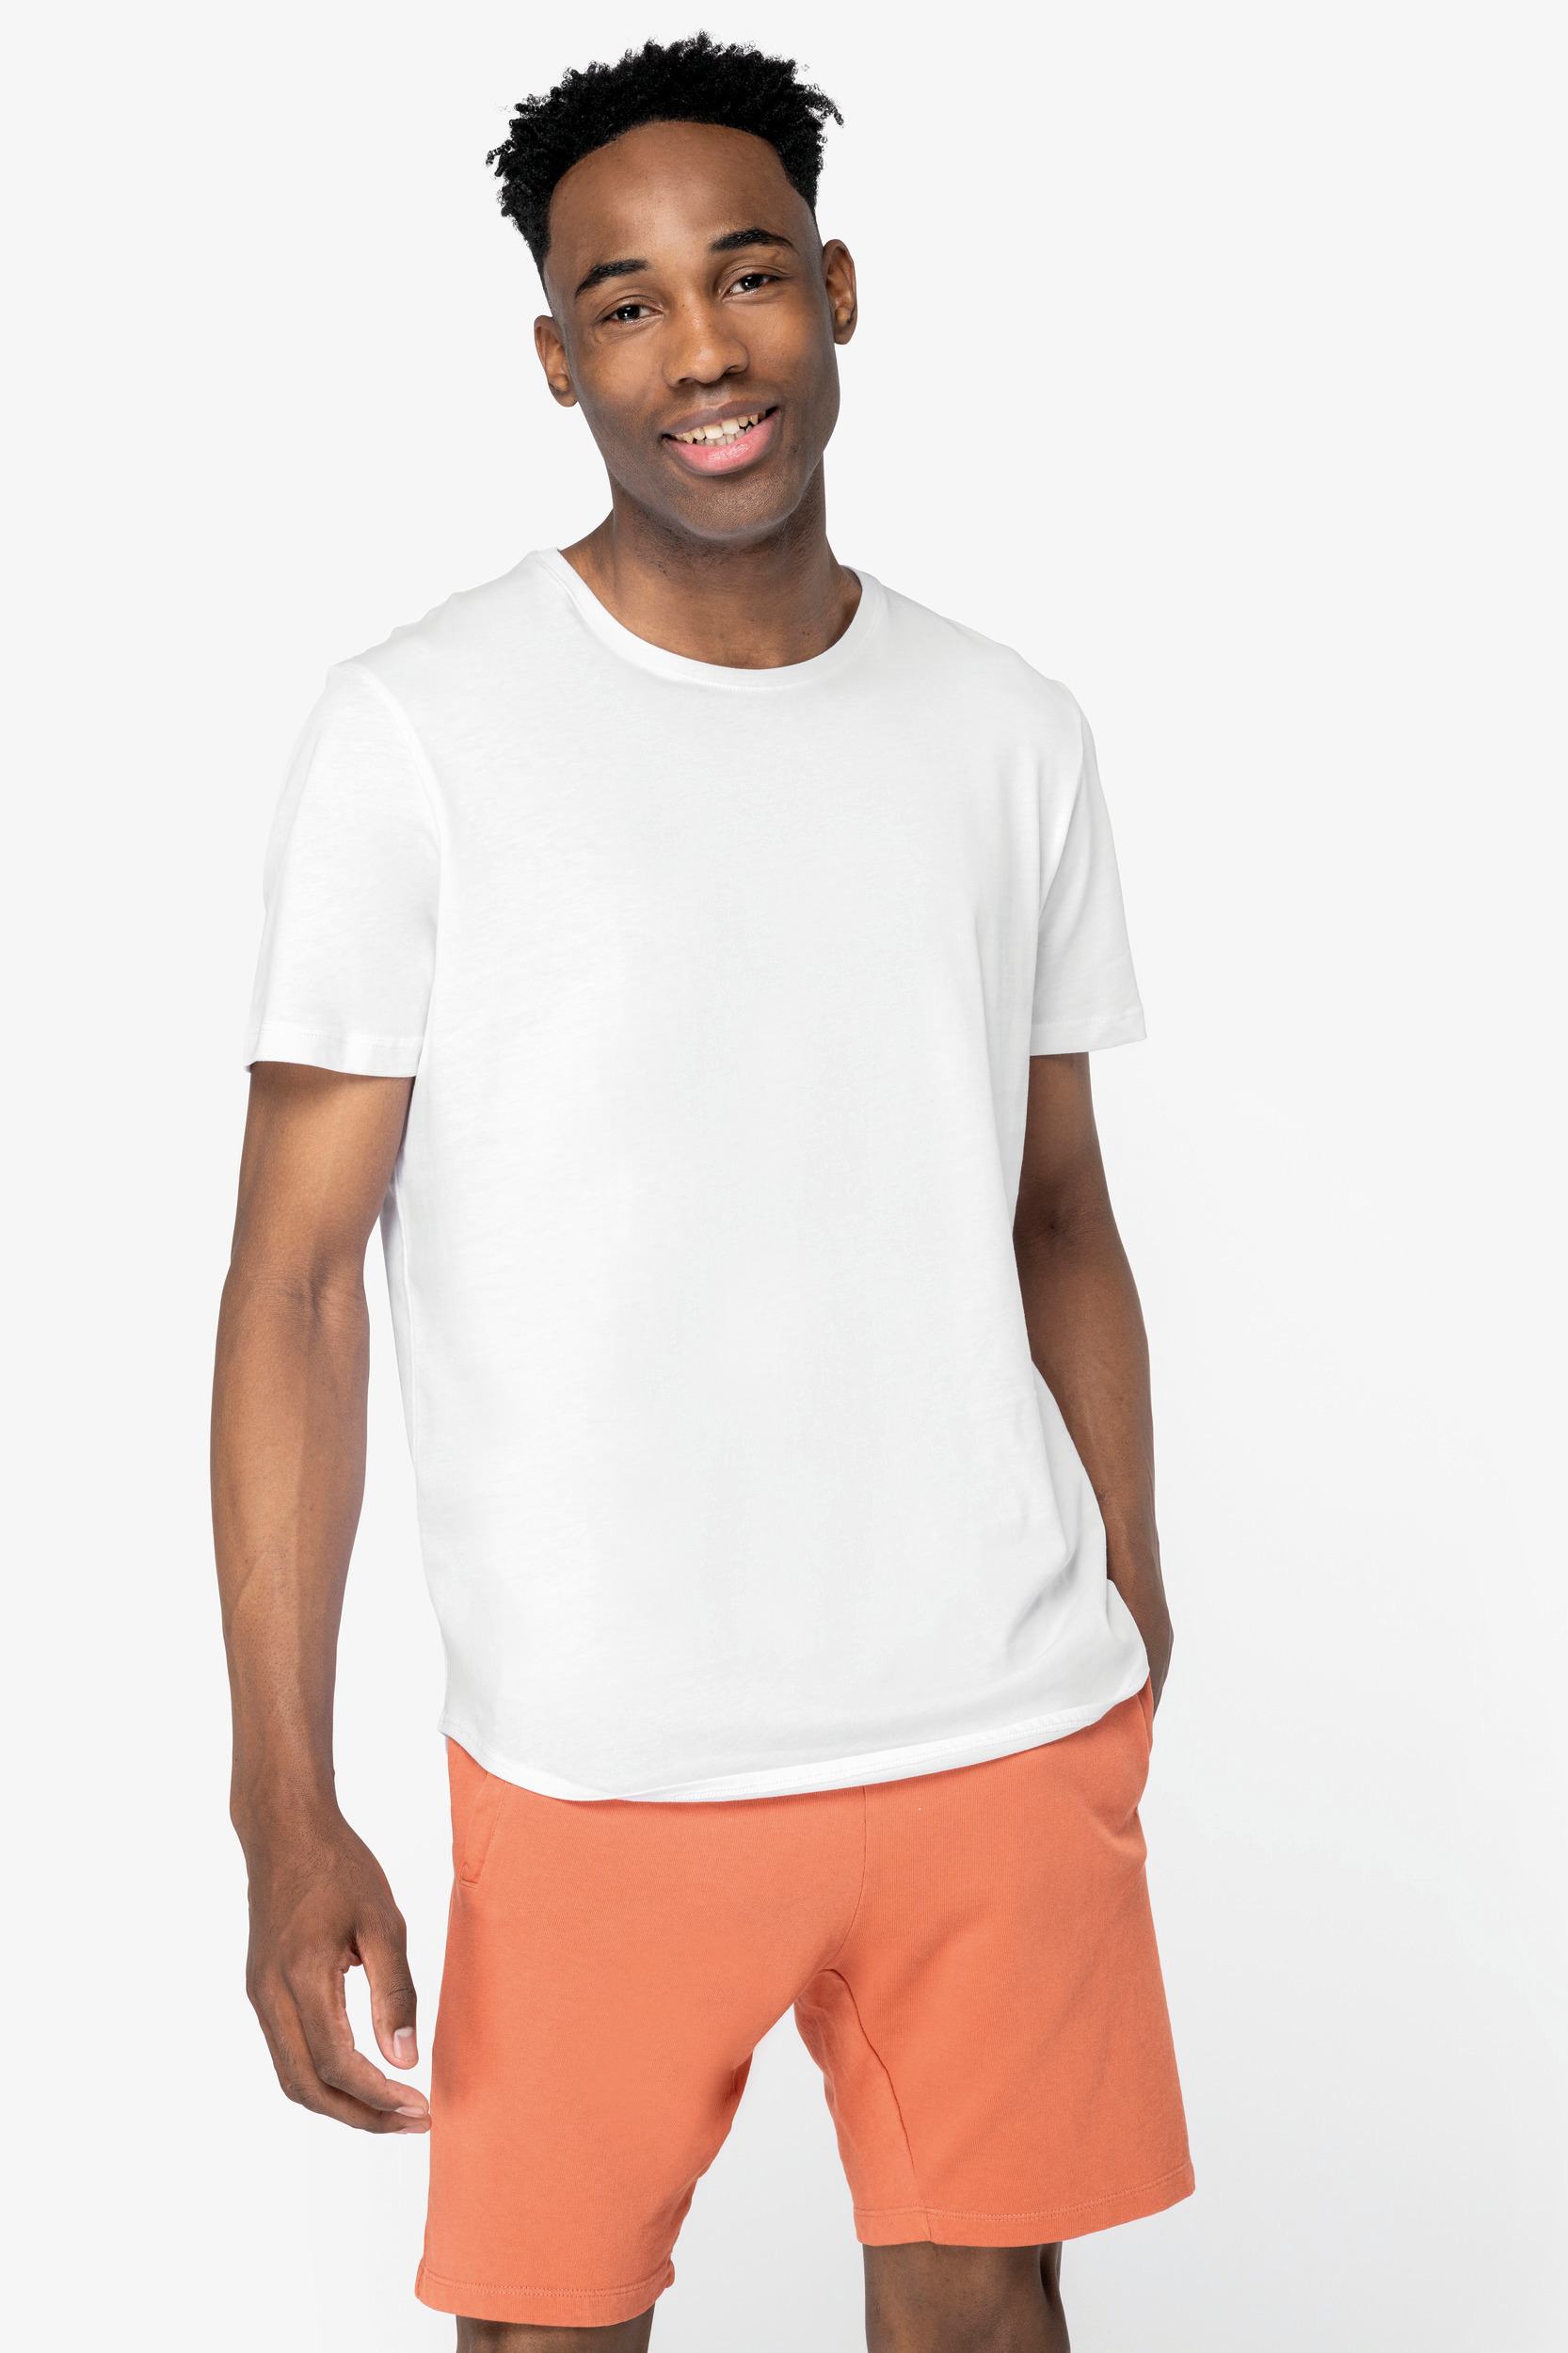 NS331 - Camiseta con dobladillo redondeado hombre